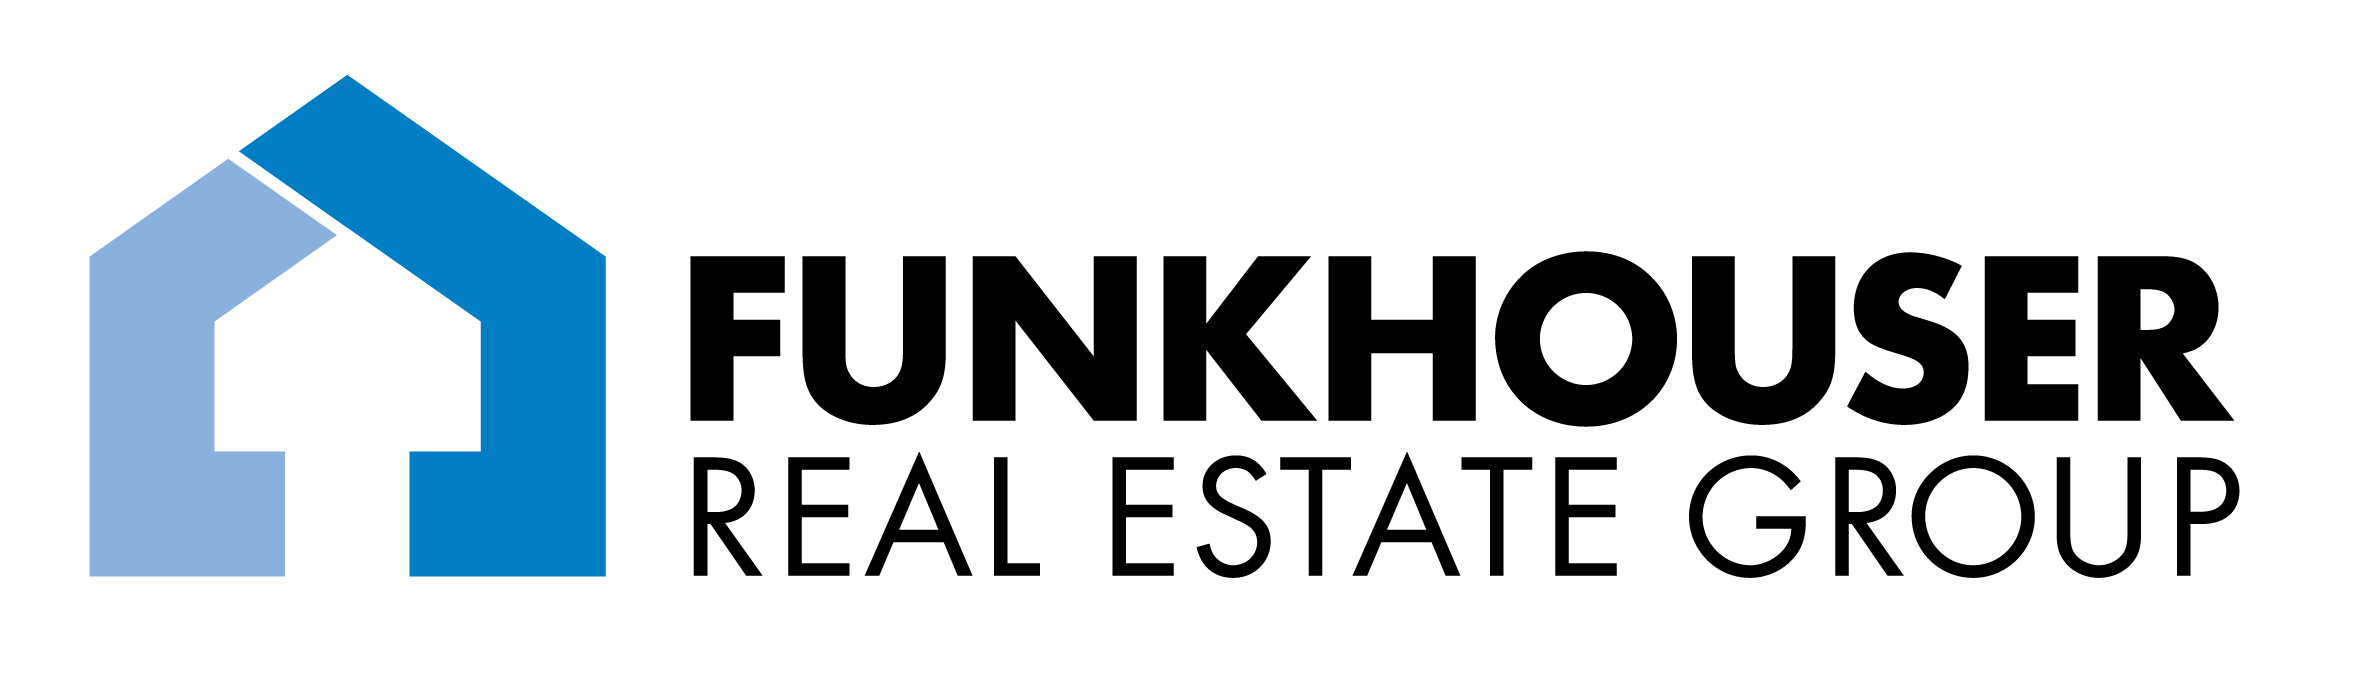 Funkhouser Real Estate Group - Woodstock Office